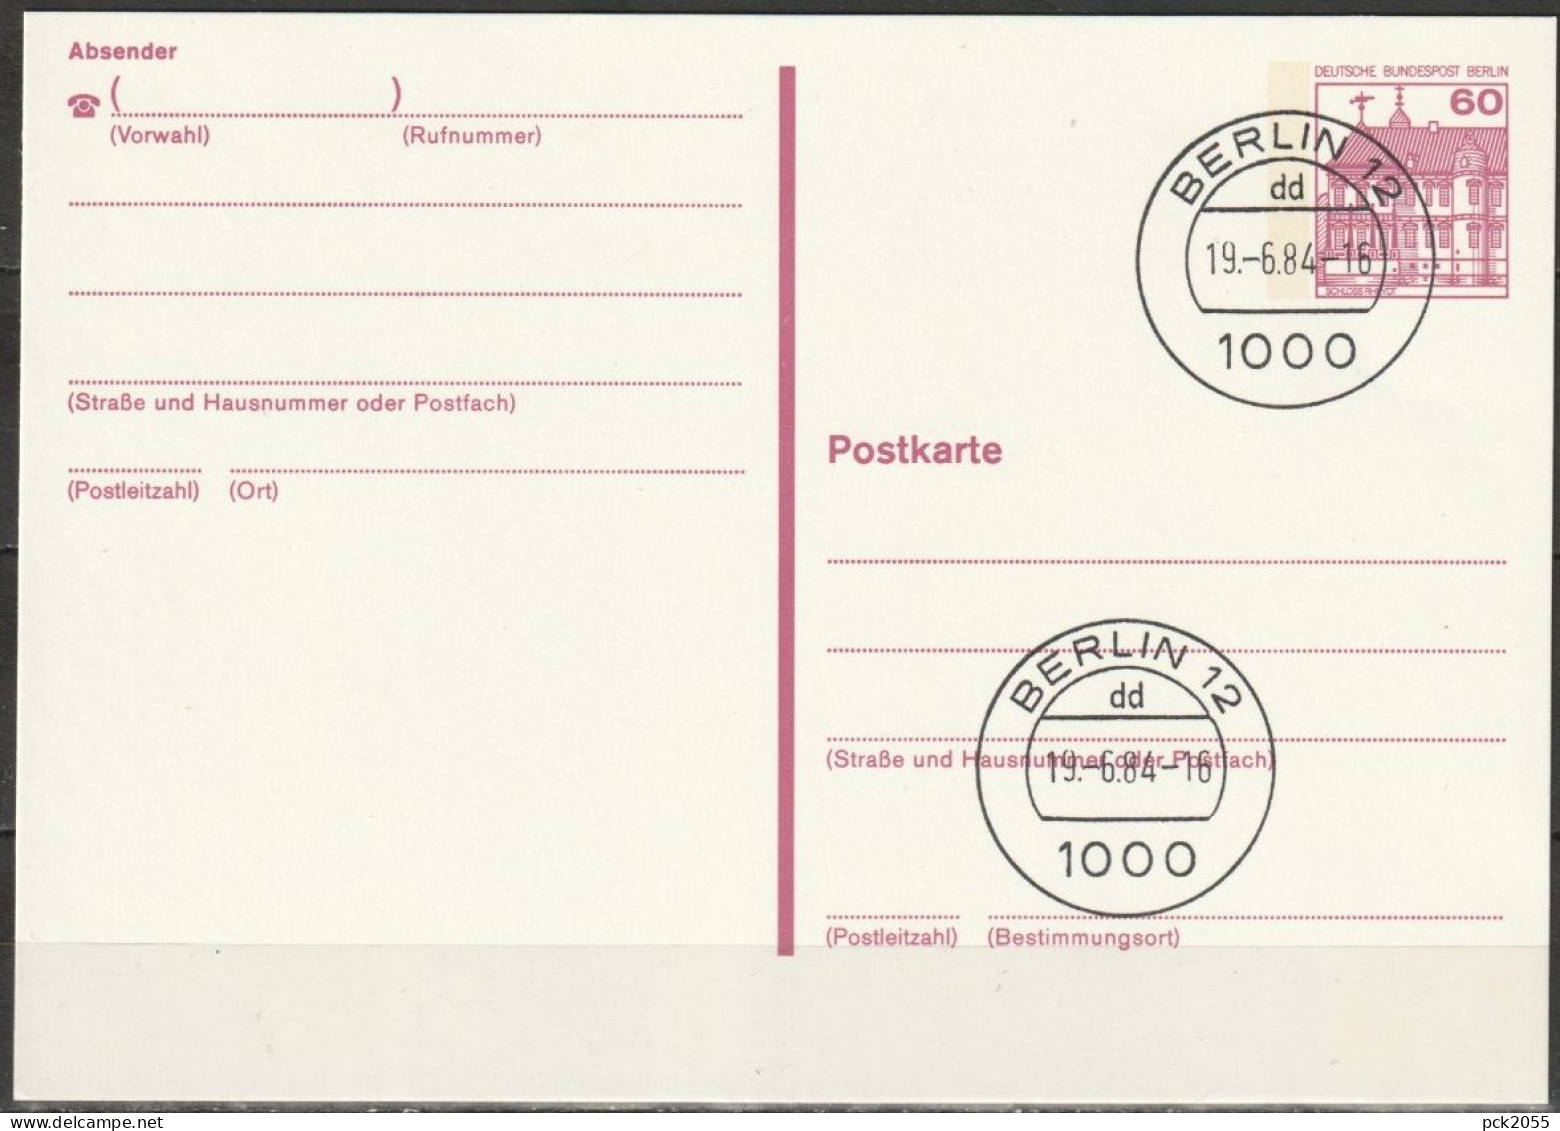 Berlin Ganzsache 1984 Mi.-Nr. P122 II Tagesstempel BERLIN 12  19.6.84  ( PK 460 ) - Cartes Postales - Oblitérées